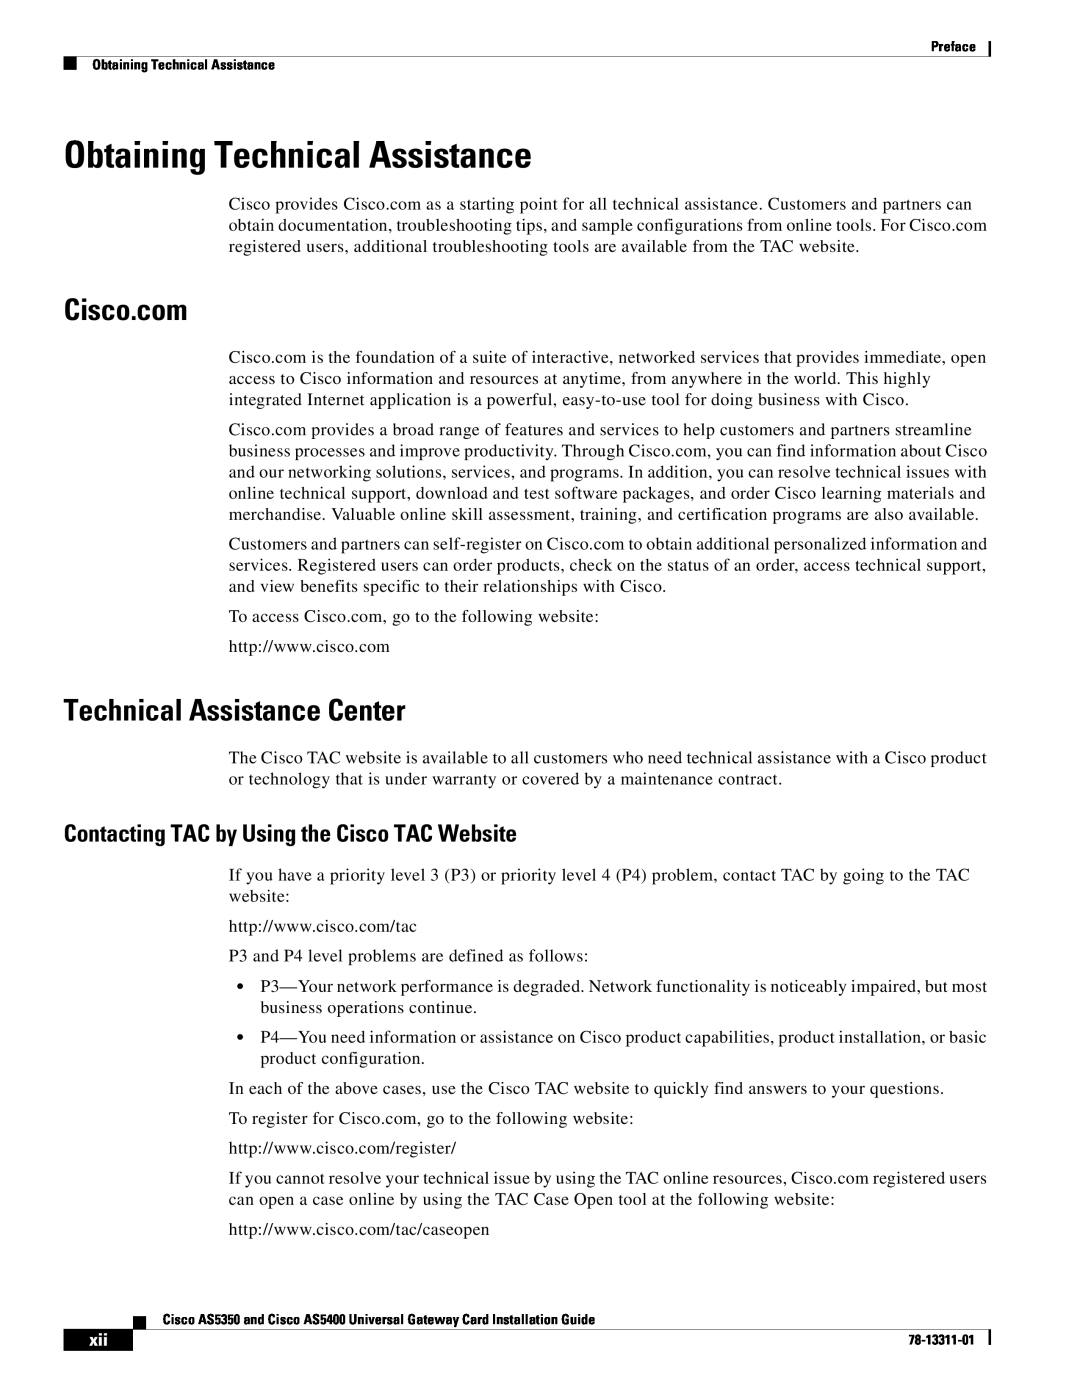 Cisco Systems AS5400 manual Obtaining Technical Assistance, Cisco.com, Technical Assistance Center 